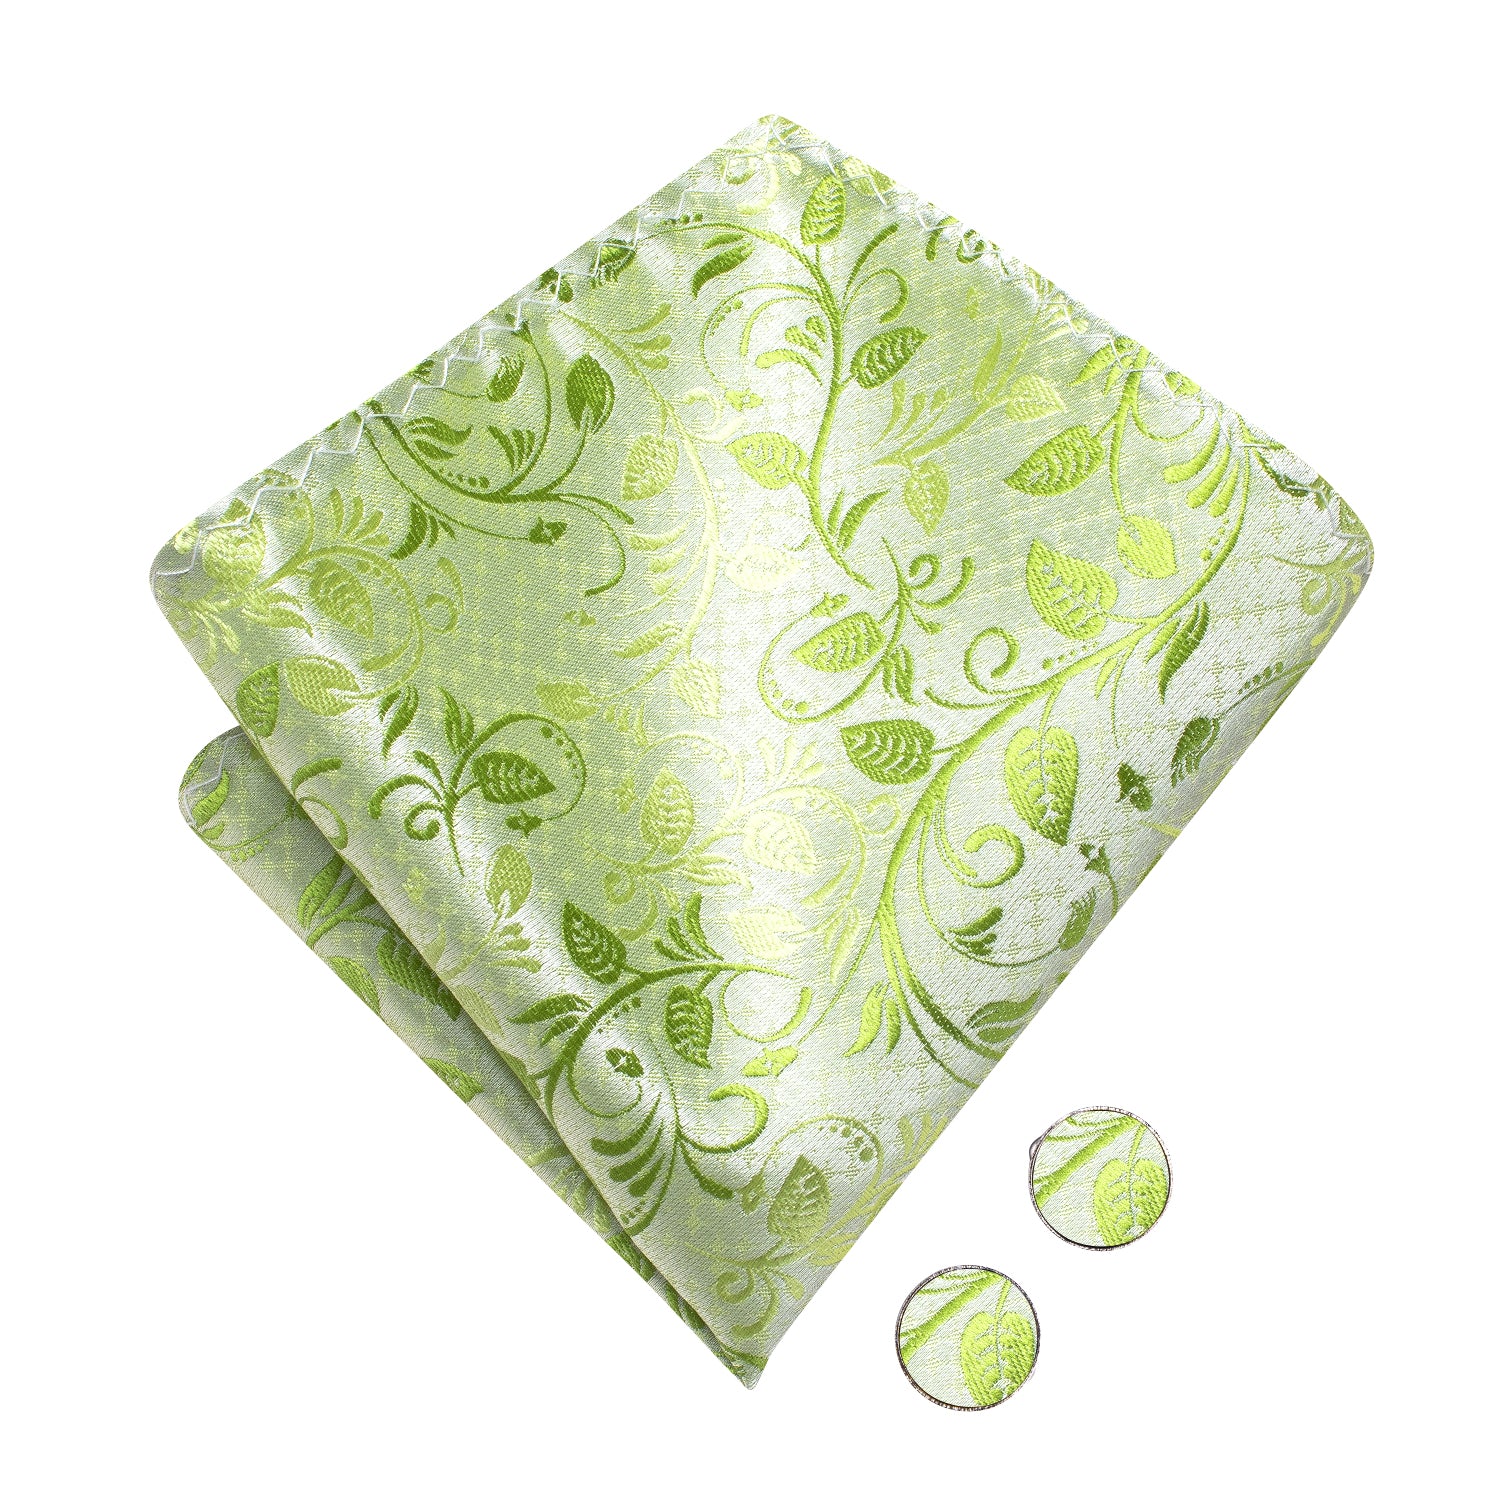 Fresh Green Floral Pre-tied Bow Tie Hanky Cufflinks Pin Set